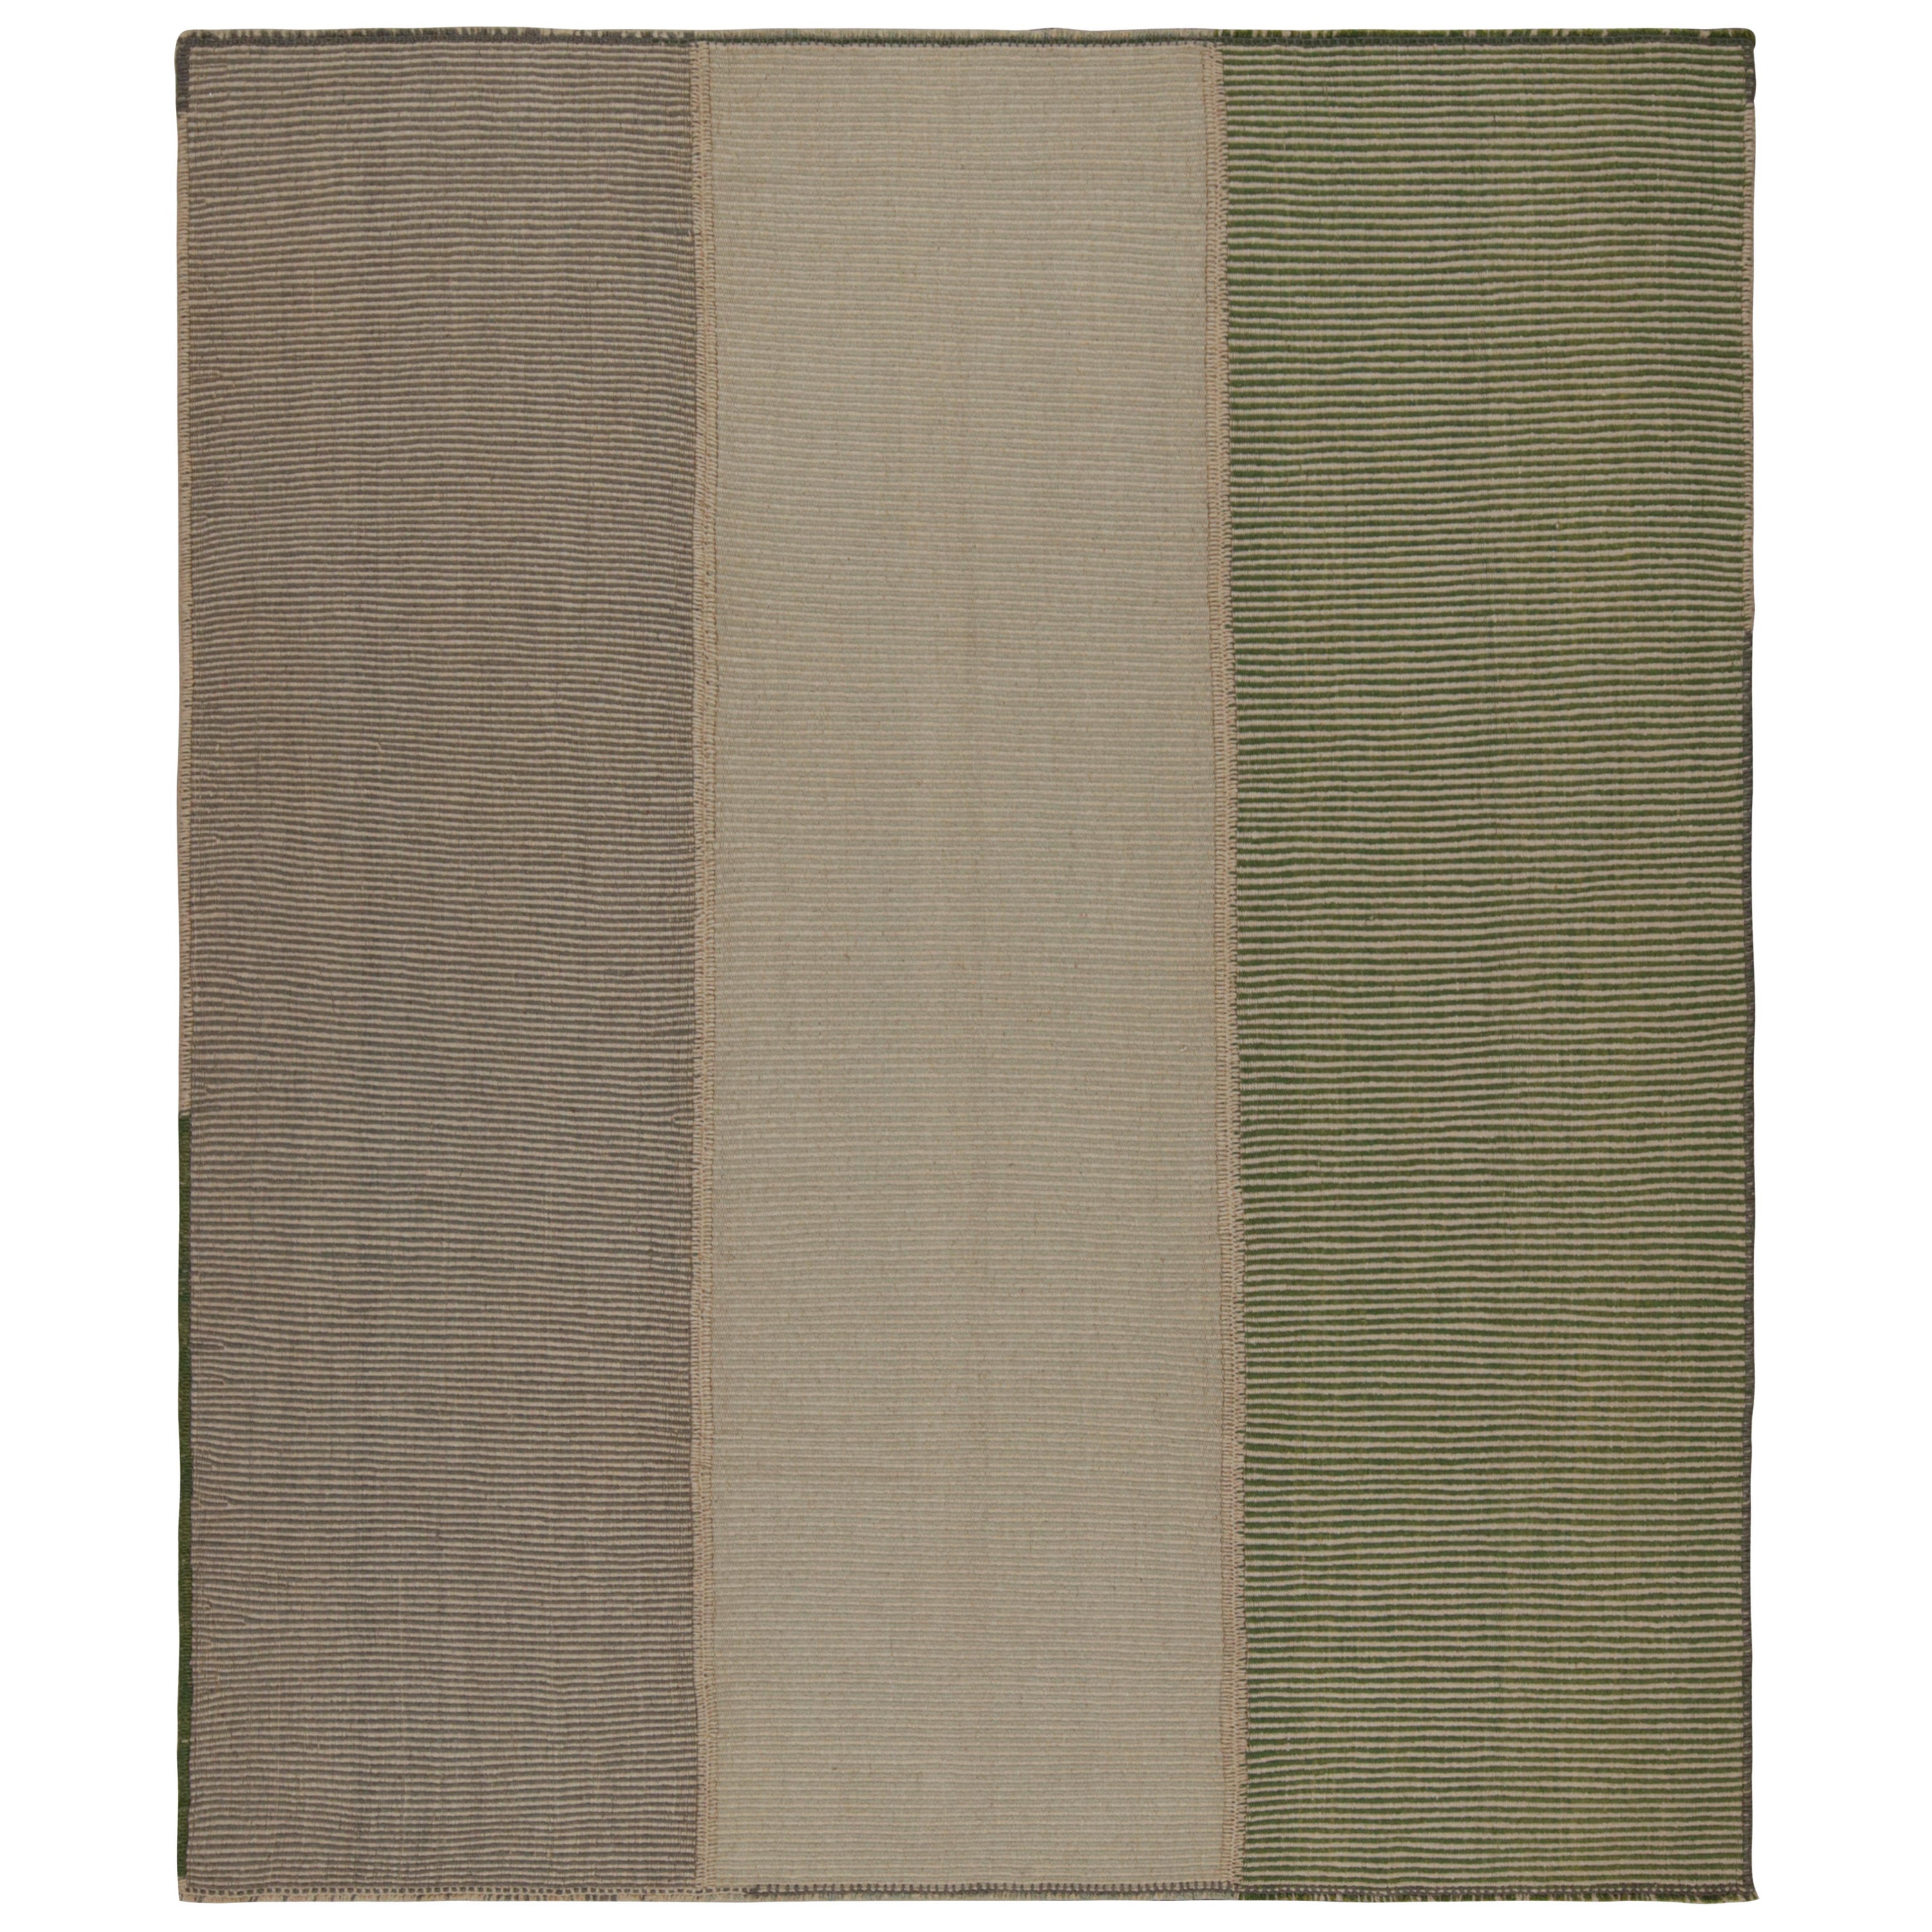 Rug & Kilim’s Modern Kilim Rug in Beige-Brown & Green Textural Stripes